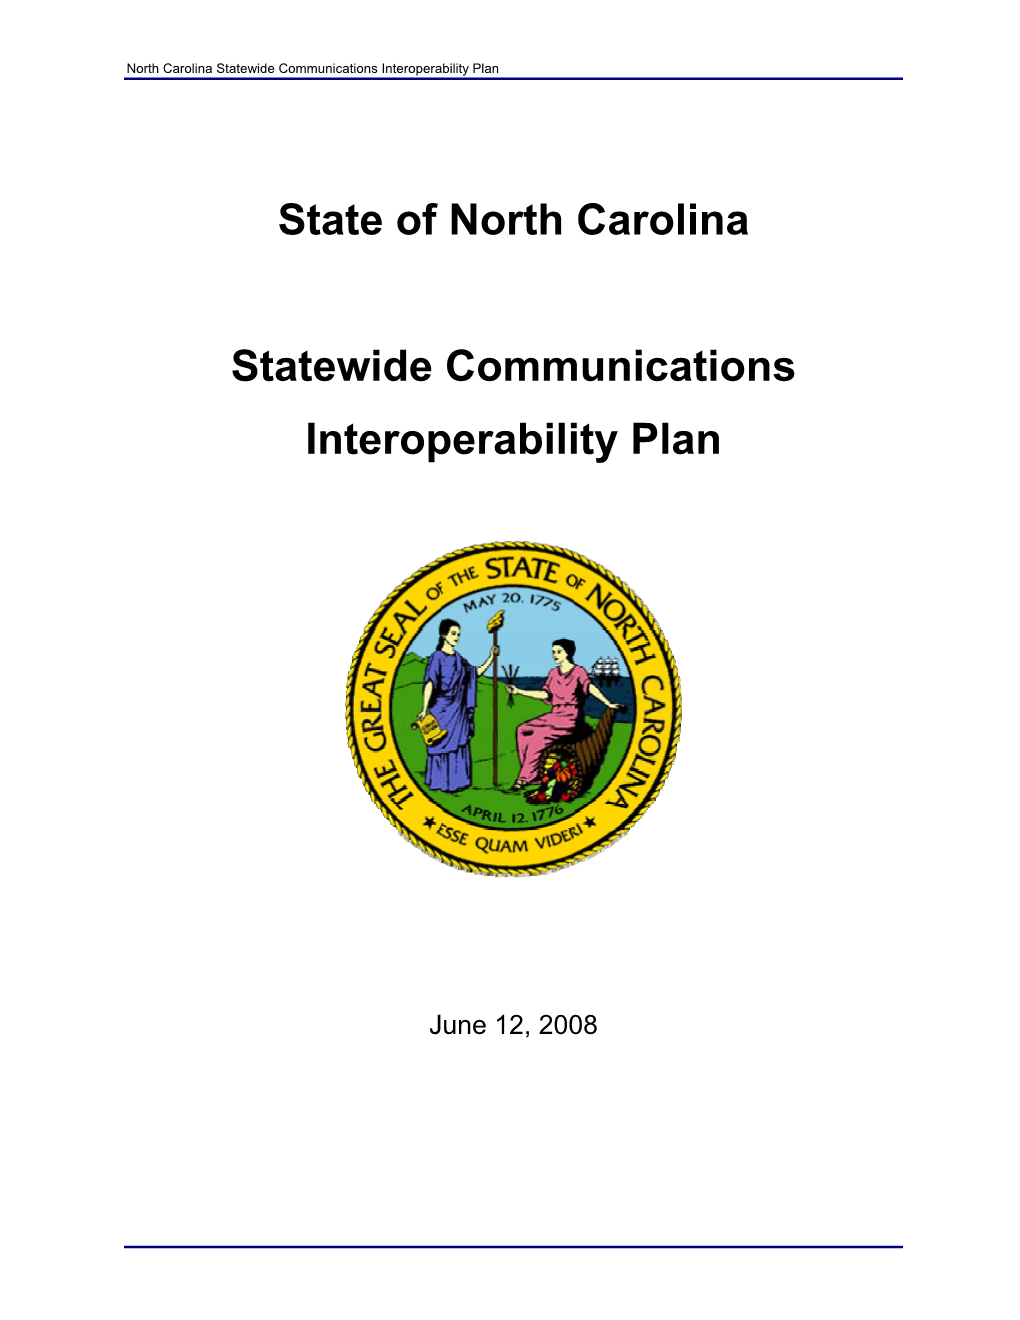 State of North Carolina Statewide Communications Interoperability Plan